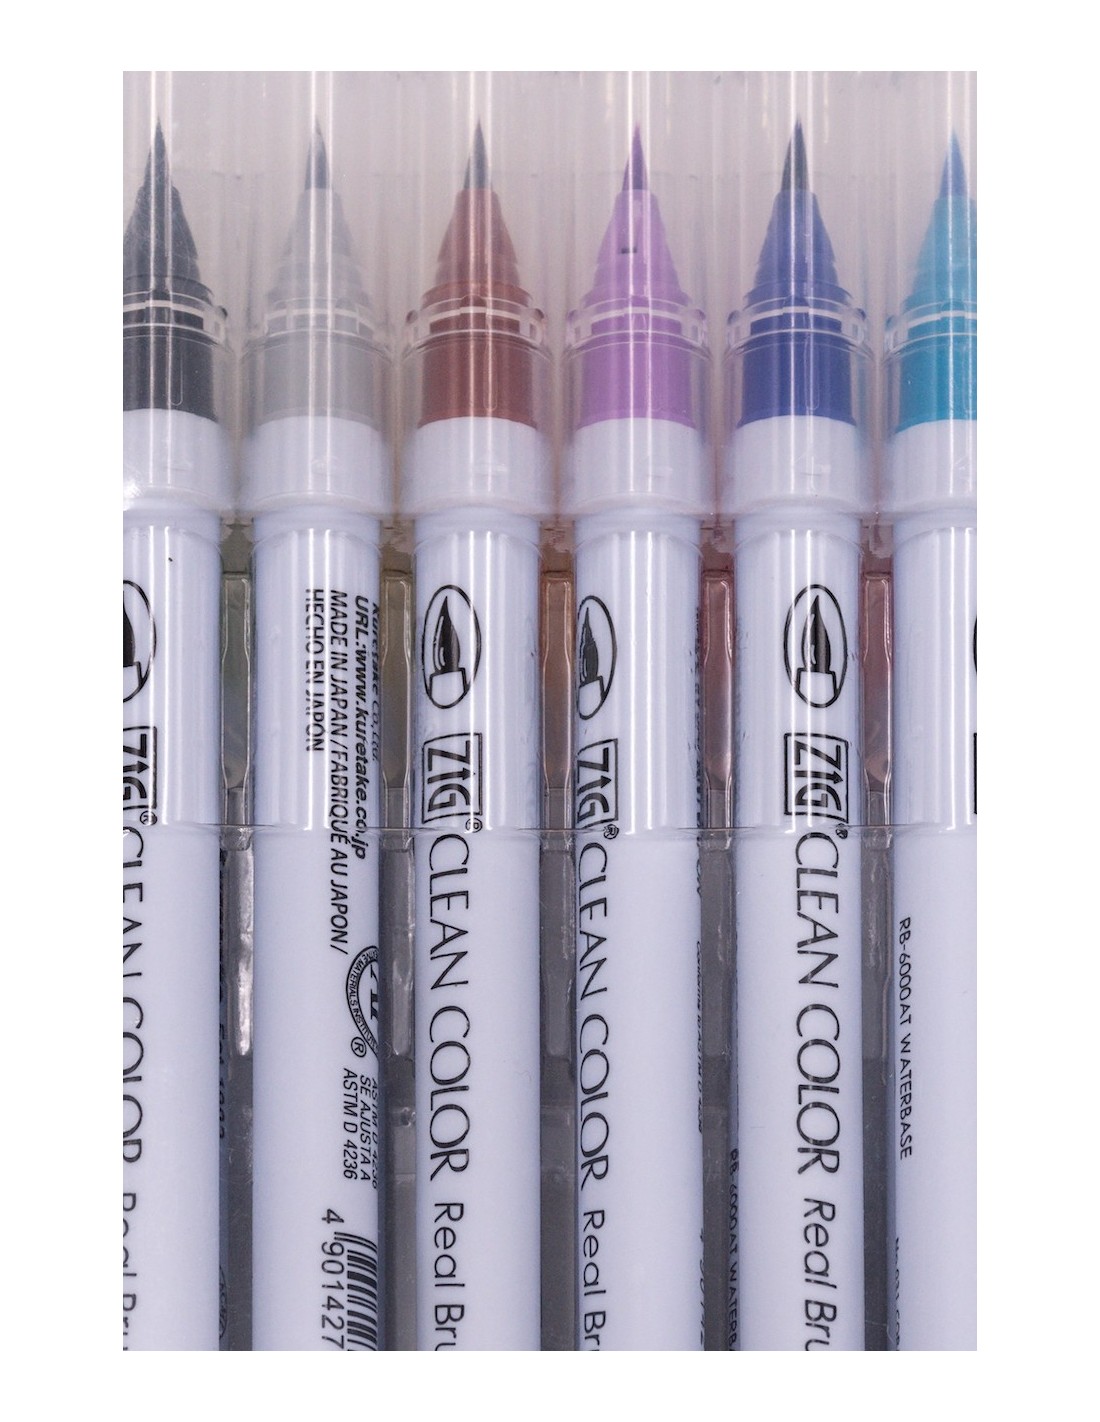 Japanese Manga Brush Pen Fude Marker - of 12 pens tips of various colors